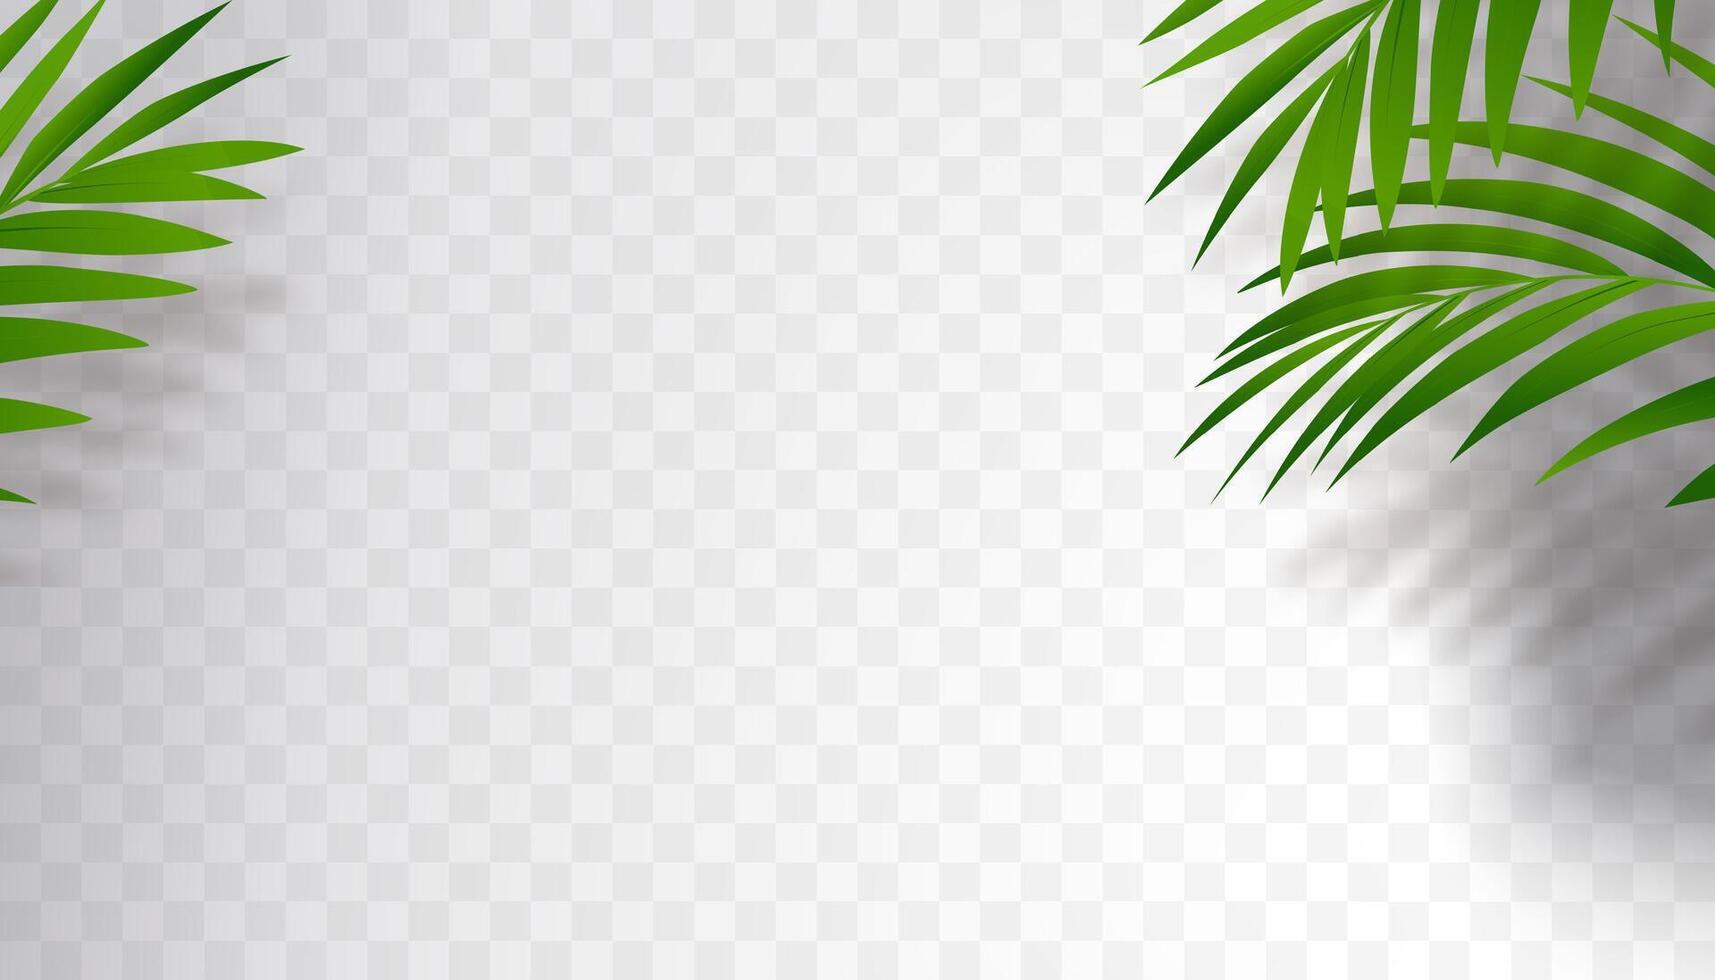 hojas sombra silueta, abstracto ramas palma hoja sombra reflexión,tropical hoja elemento para cubrir en Bosquejo producto presentación vector